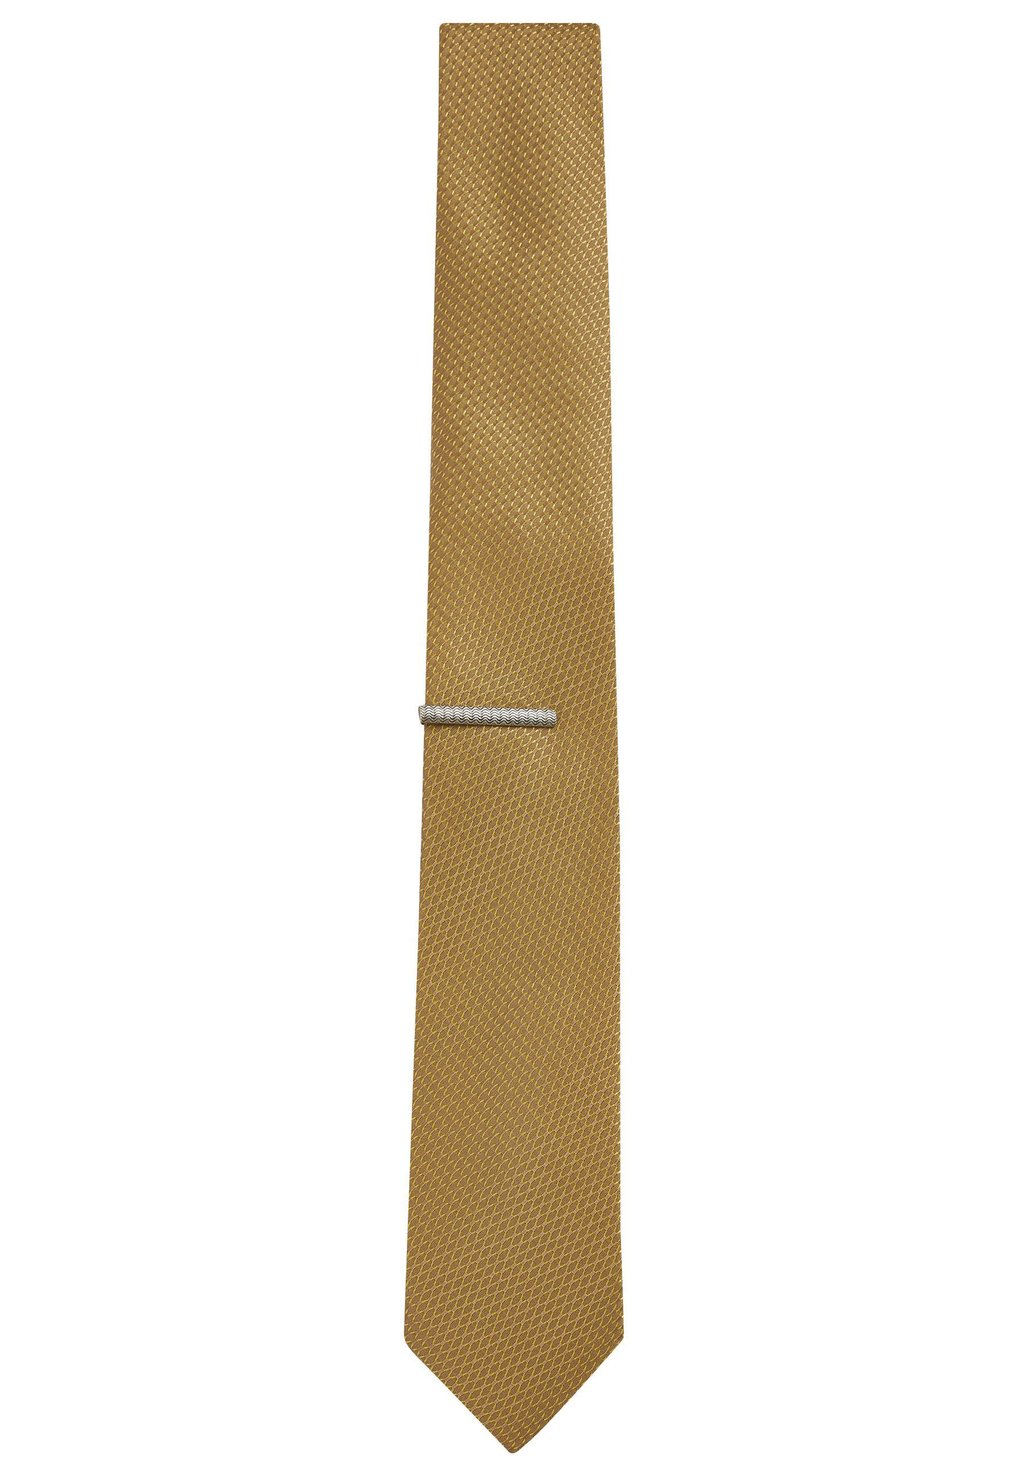 Галстук SLIM SET Next, цвет mustard yellow галстук slim set next цвет charcoal grey